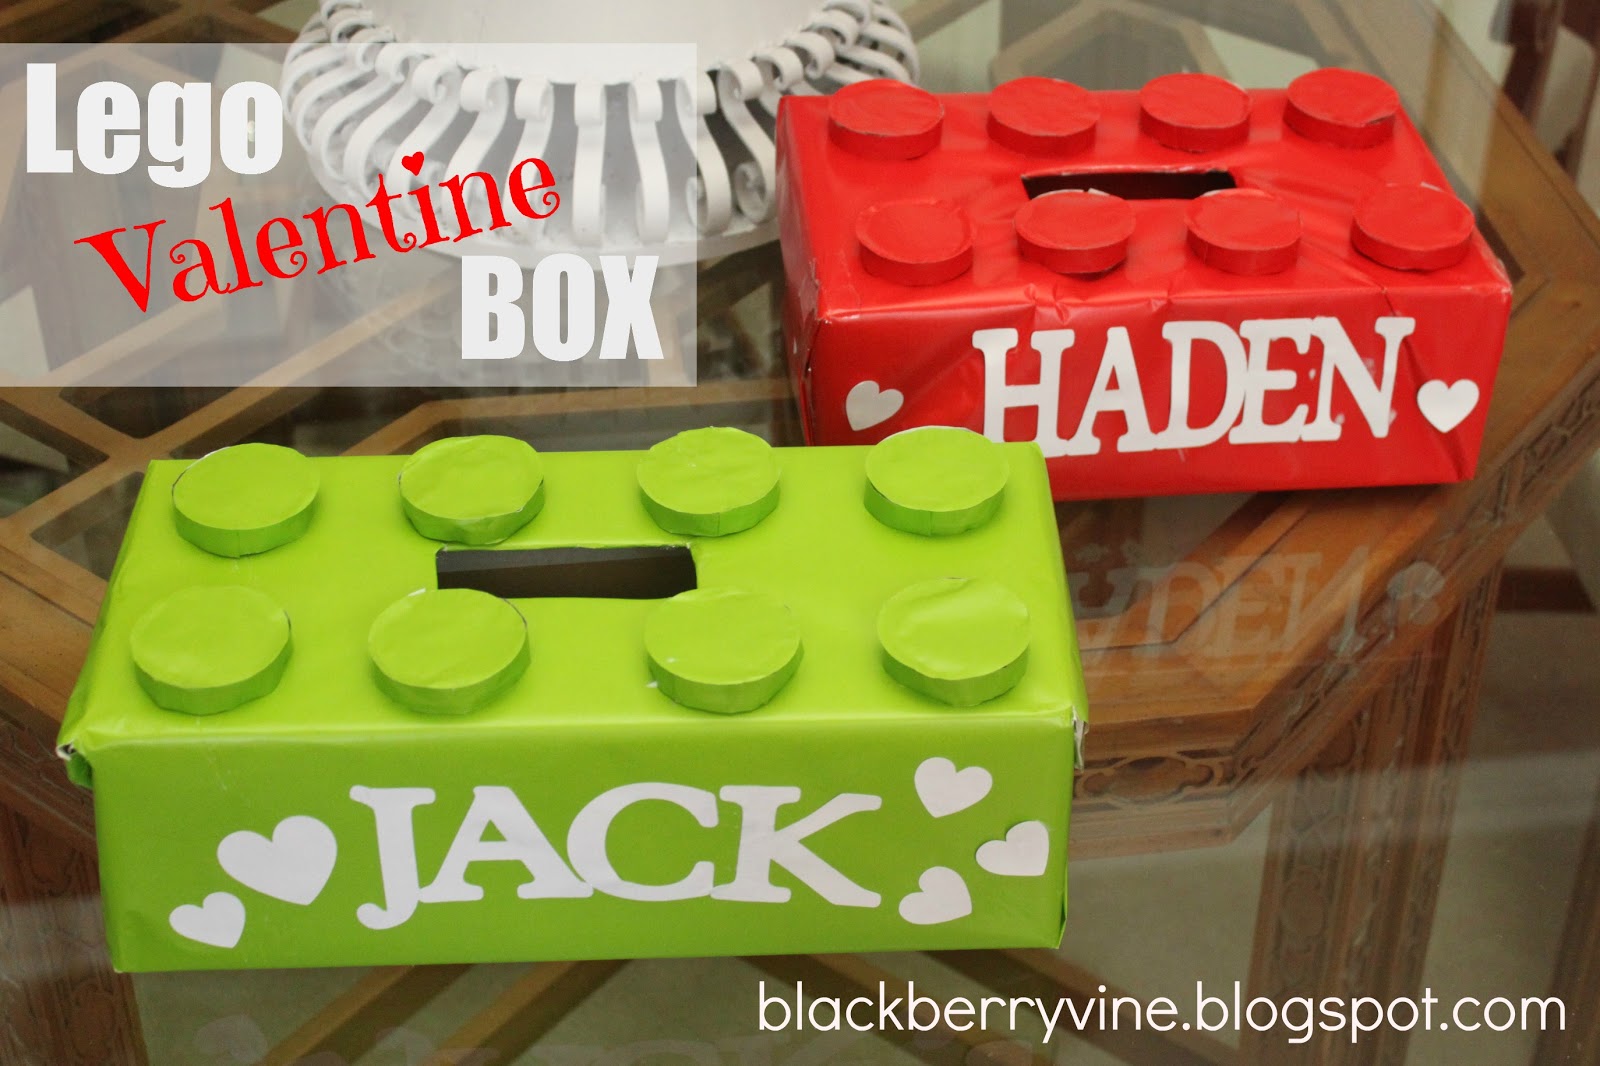 Lego Valentine Box